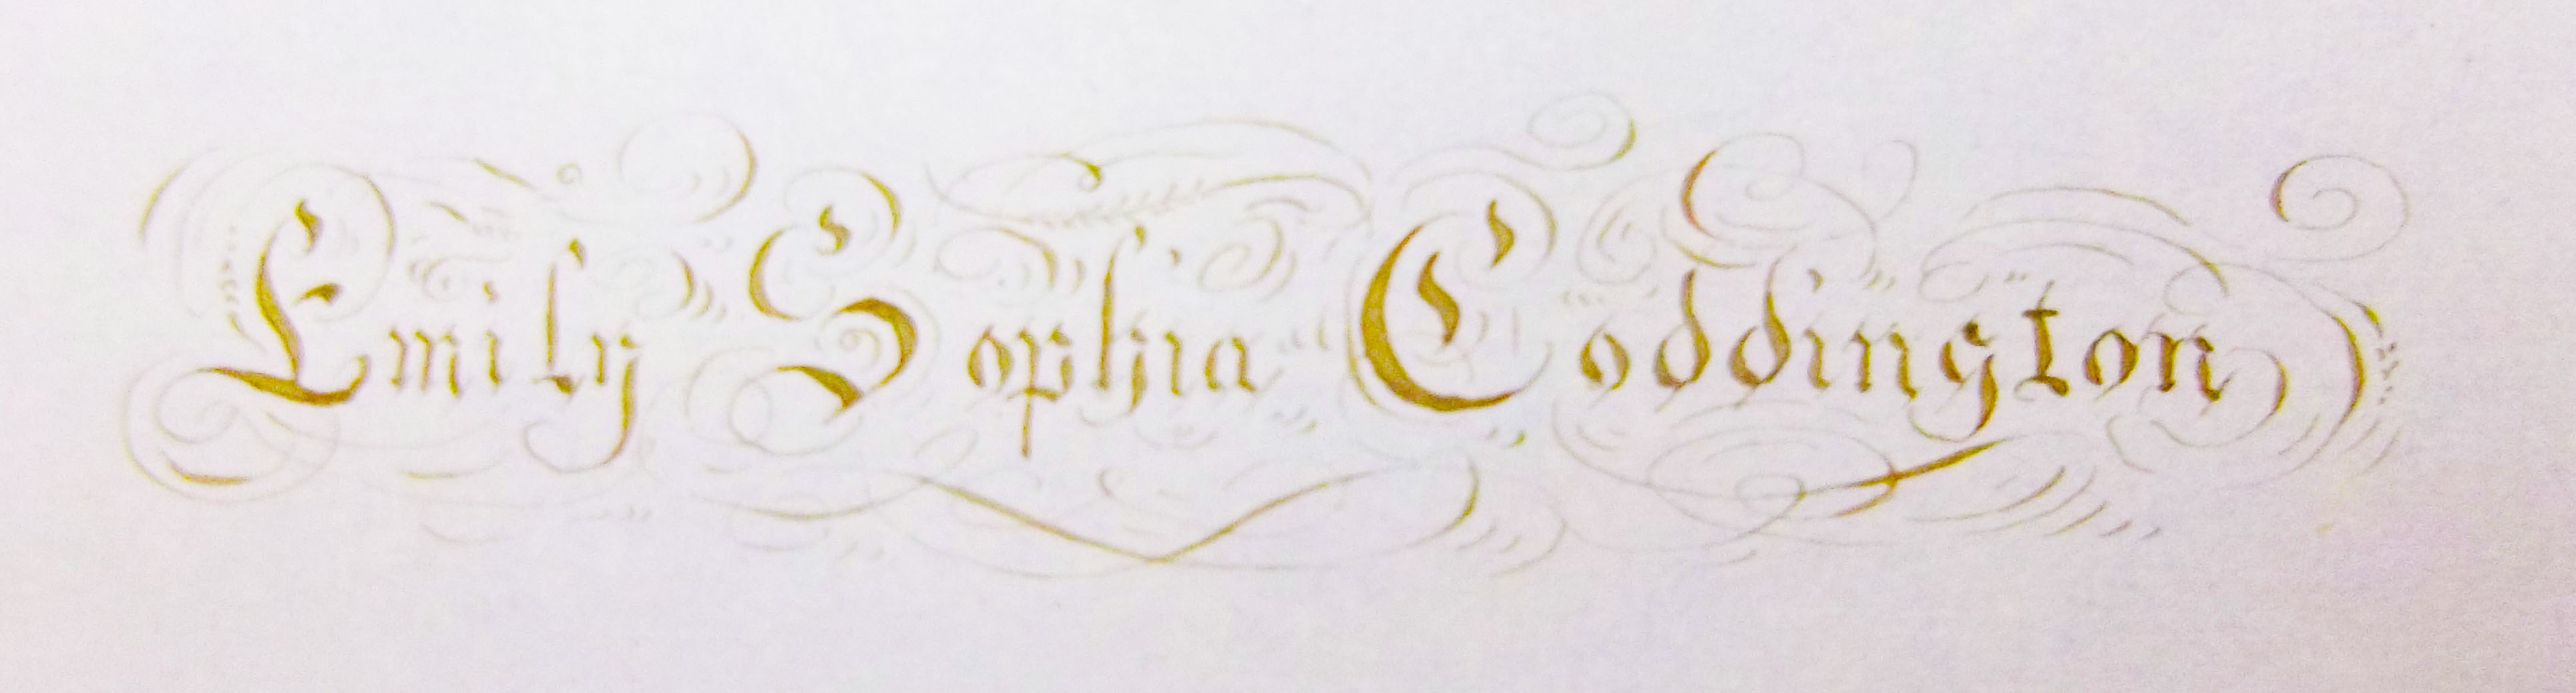 sophia title page